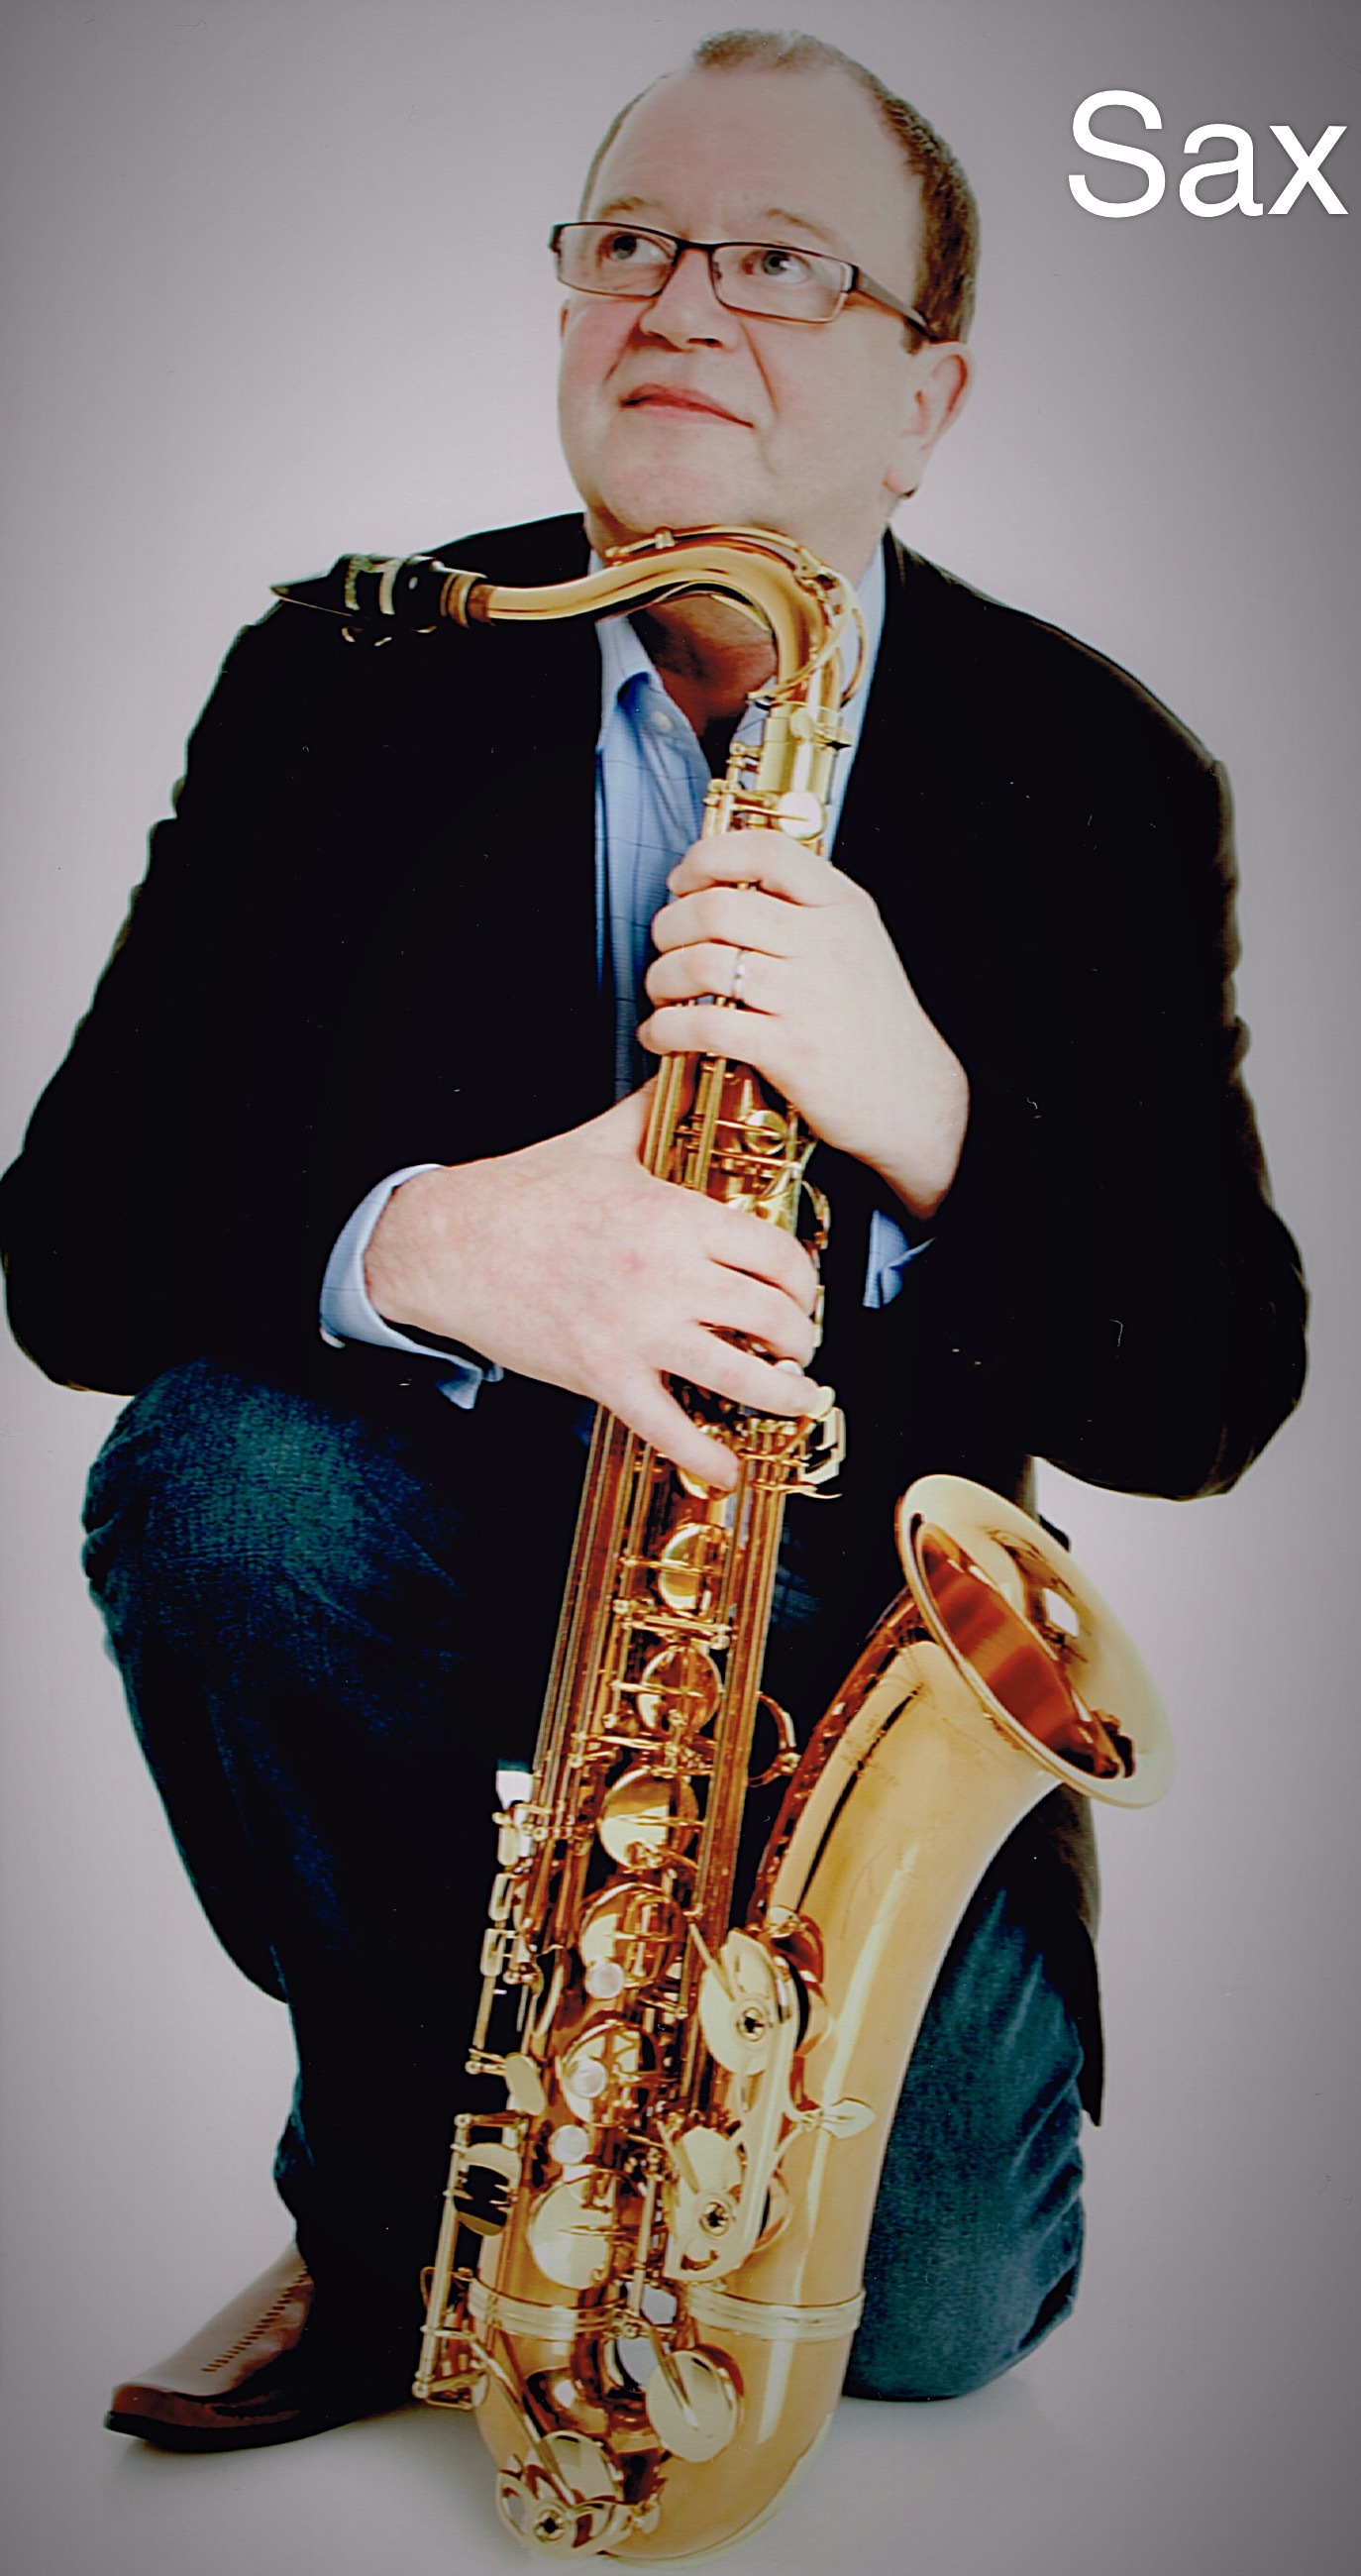 Saxophonist Ken in Carlisle, Cumbria